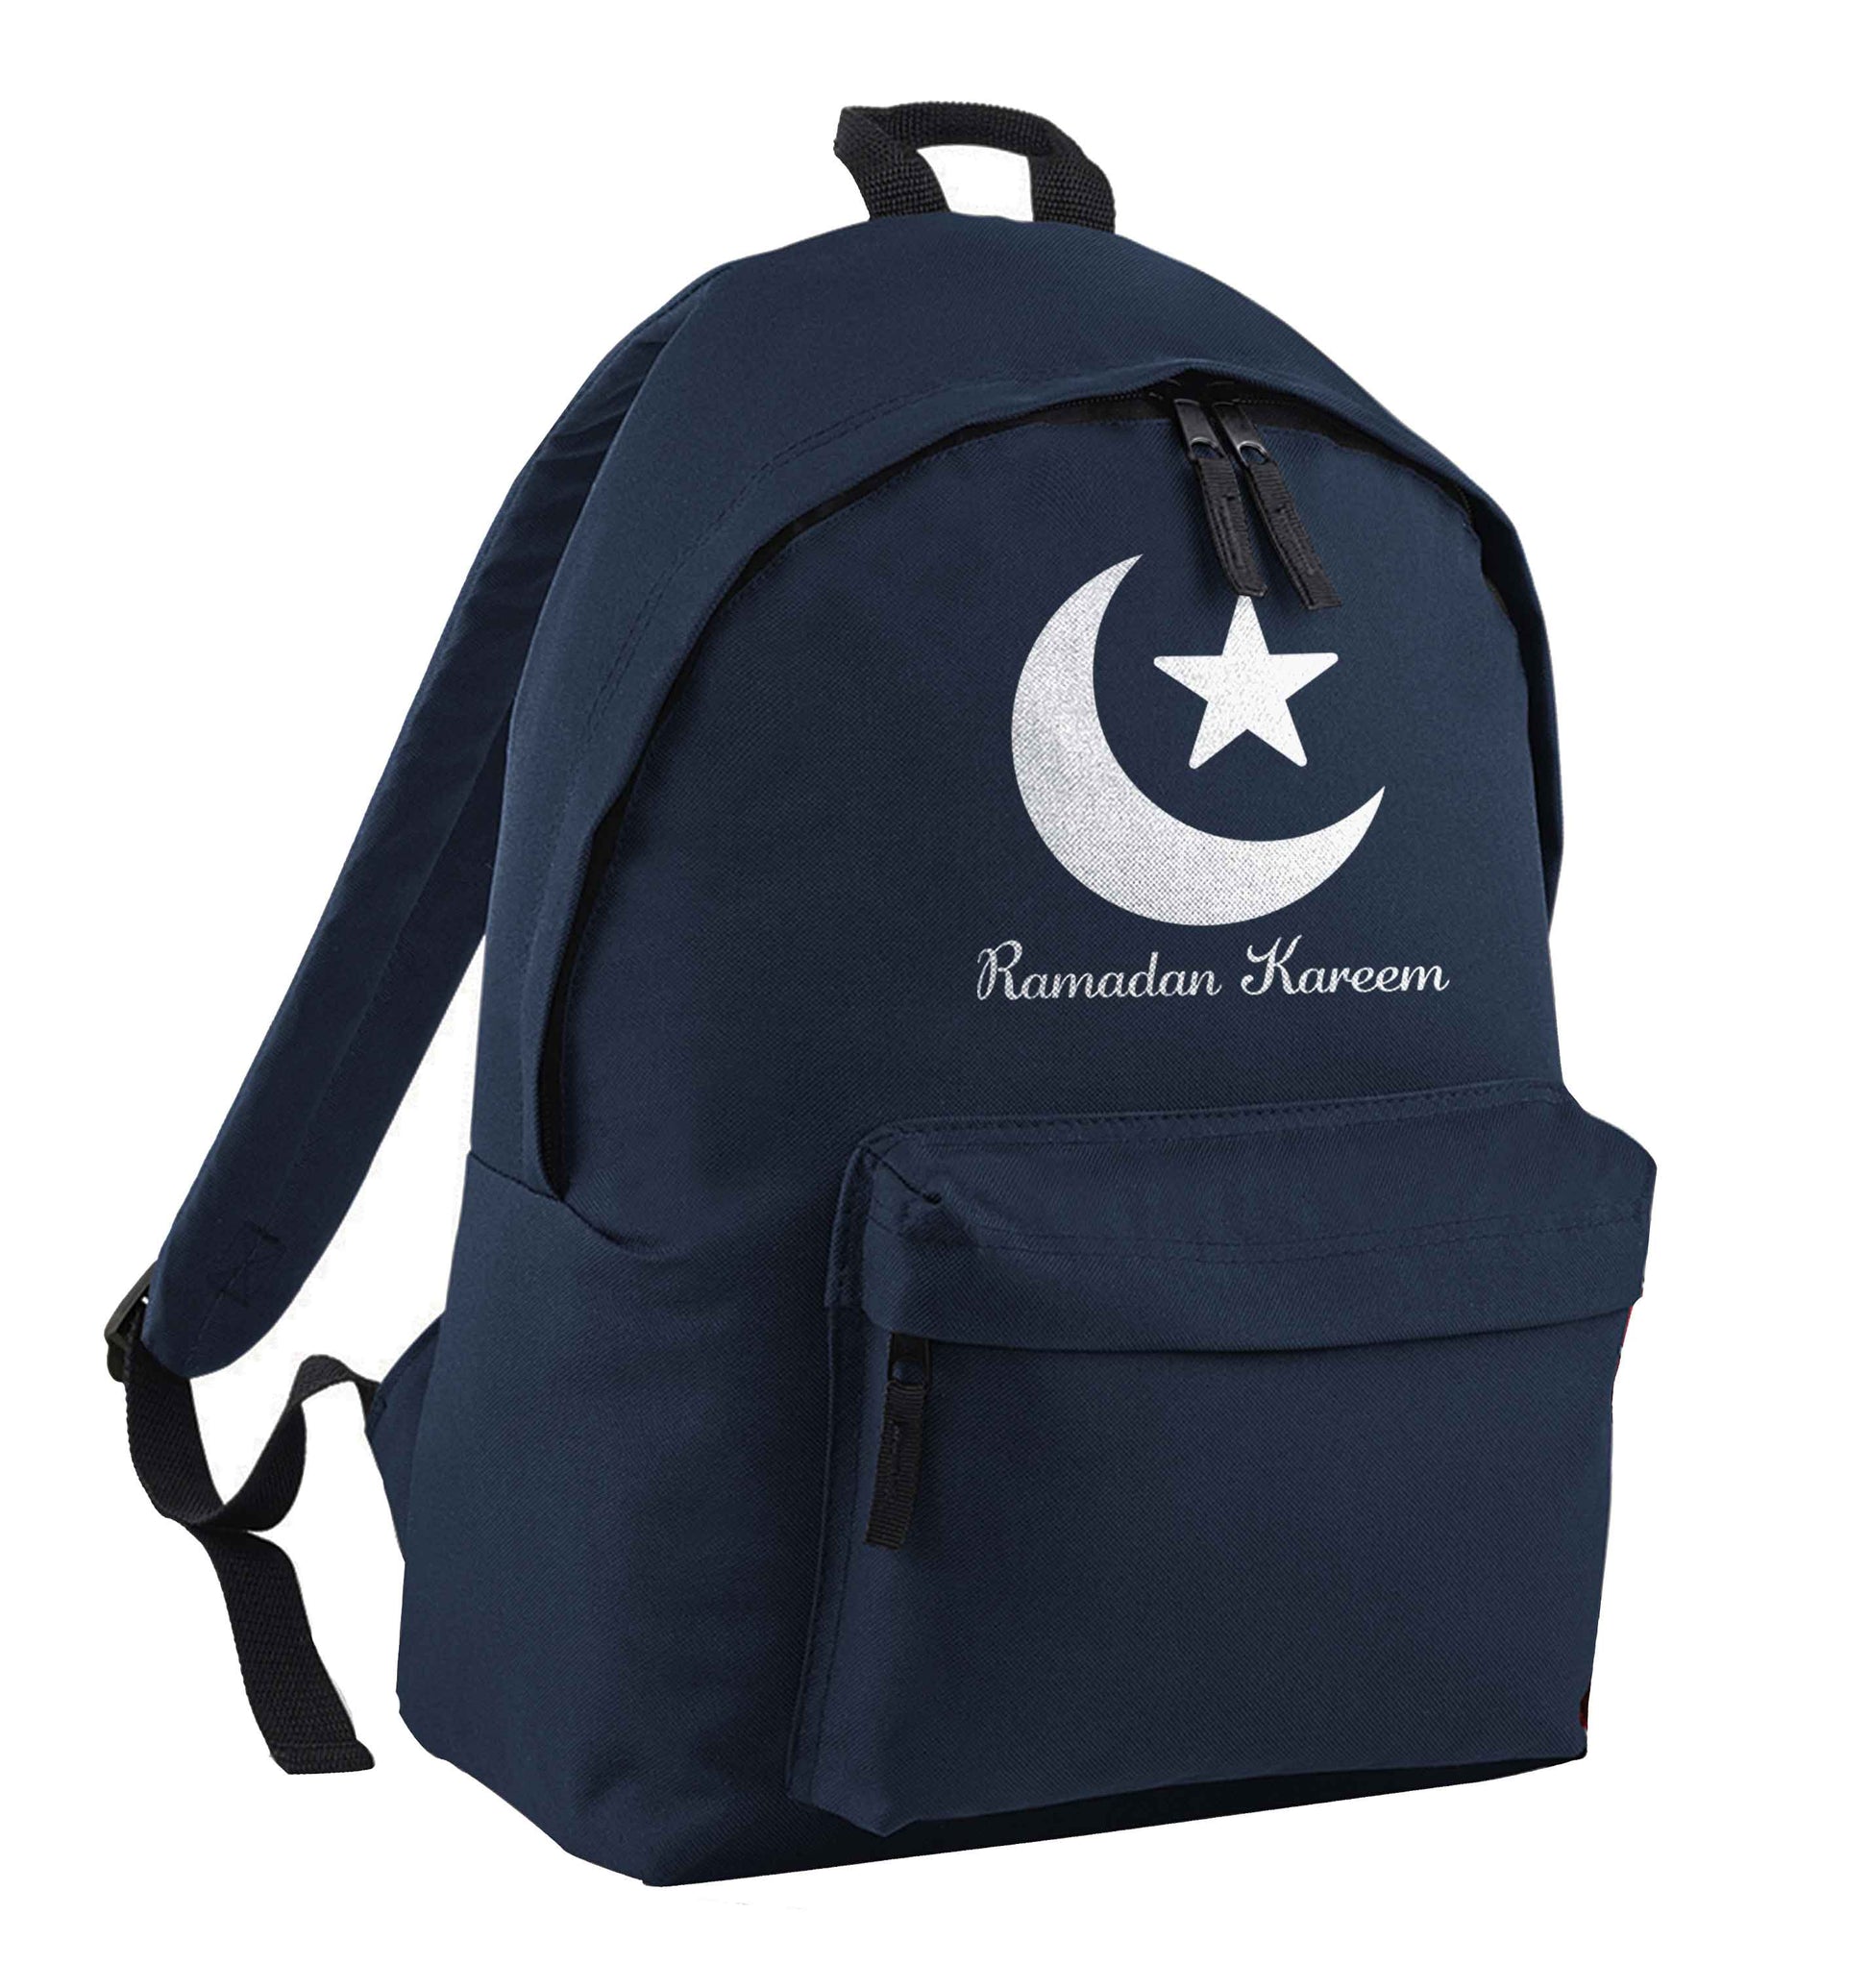 Ramadan kareem navy children's backpack